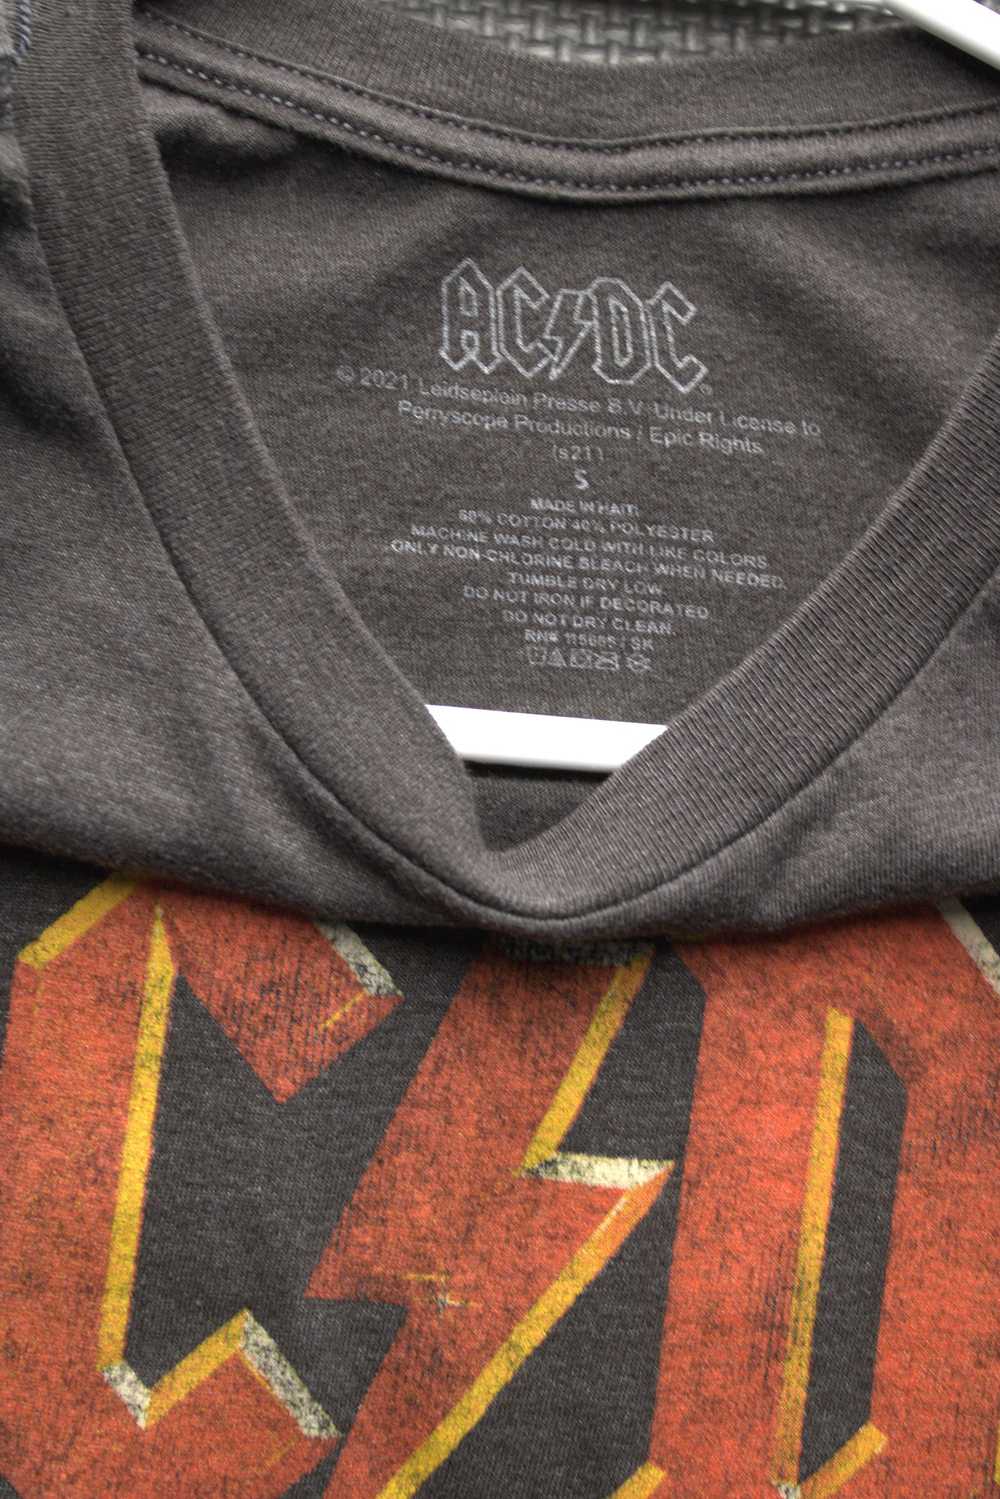 Ac/Dc AC DC Logo t shirt - image 2